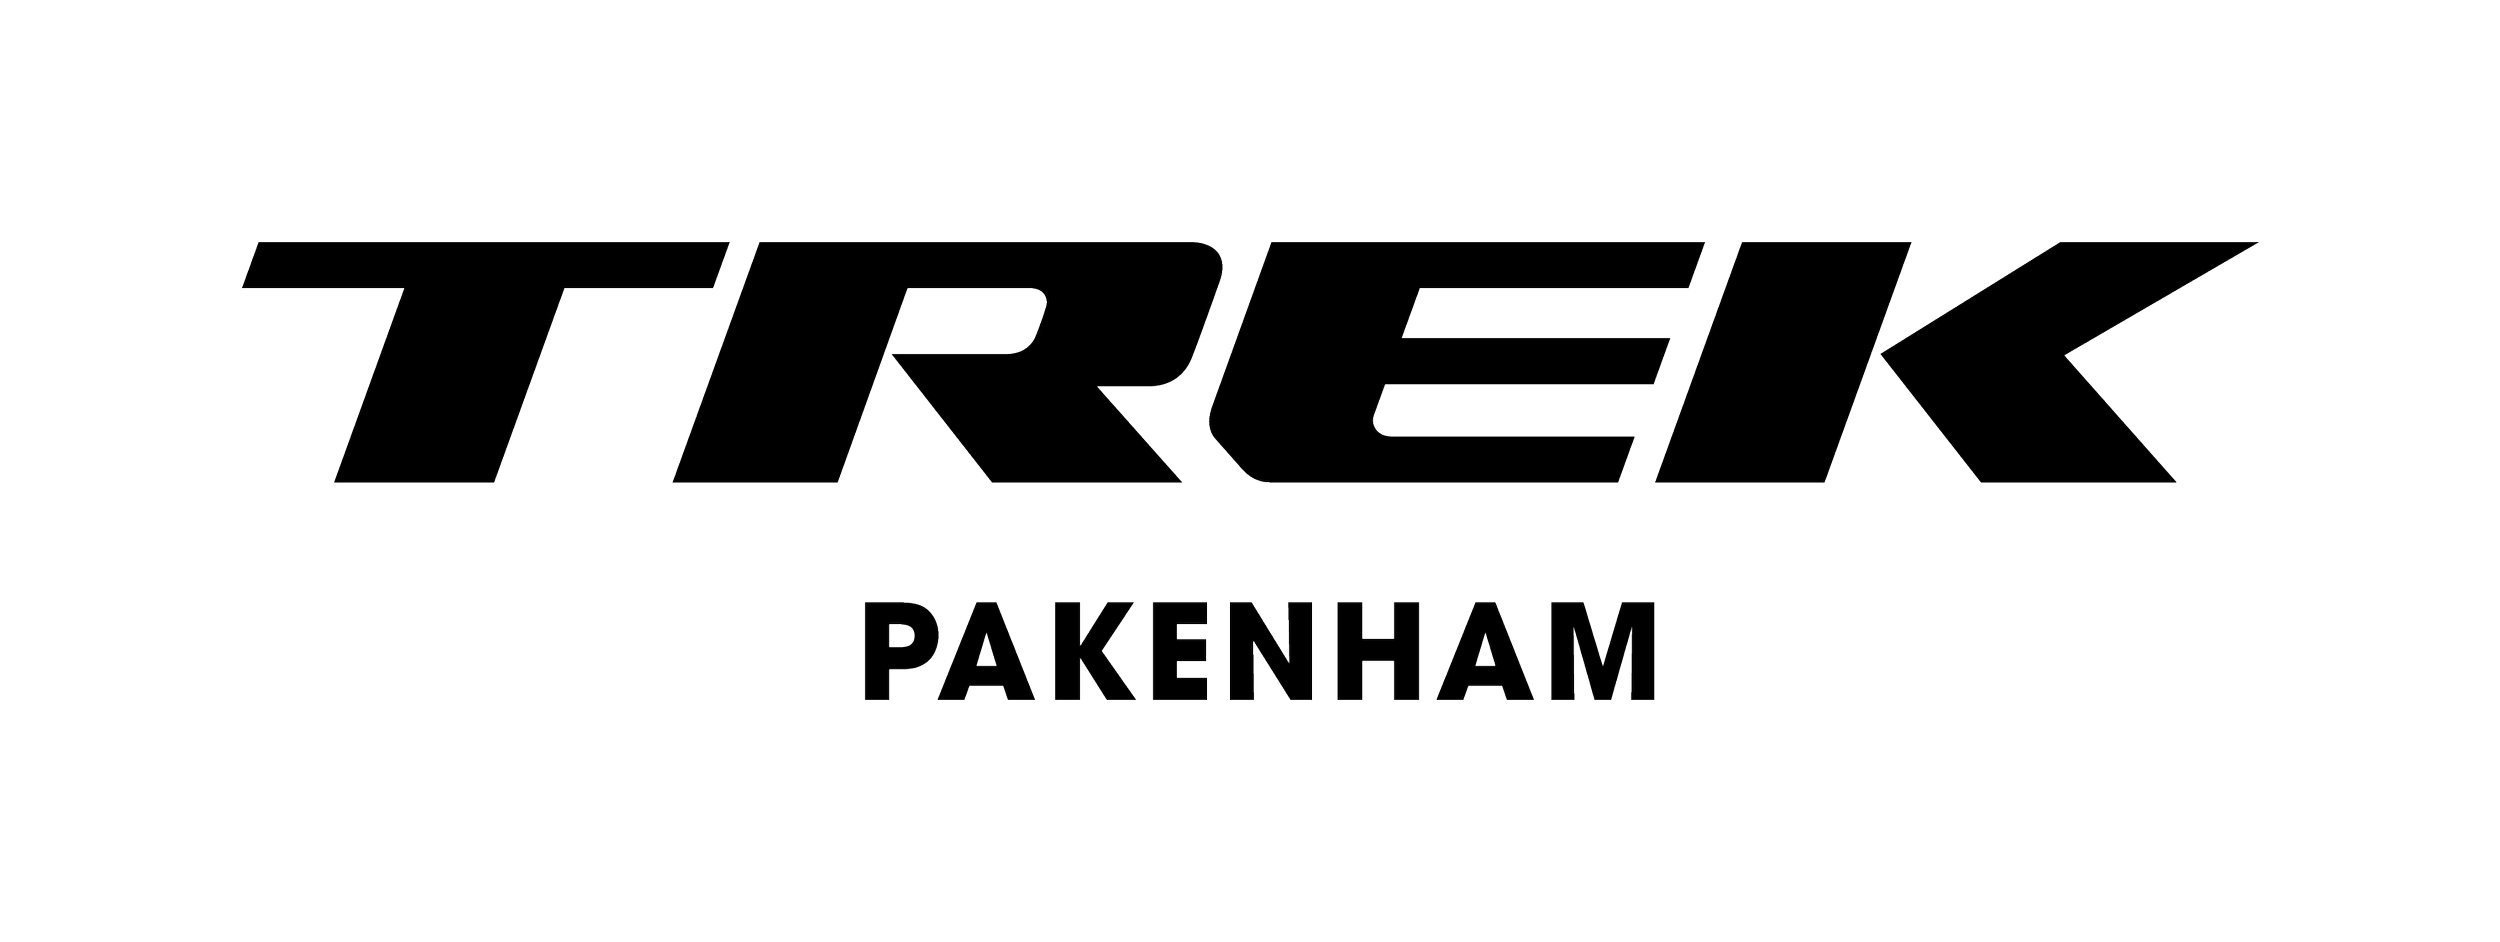 2018_Trek_logo_location_Pakenham_black.png